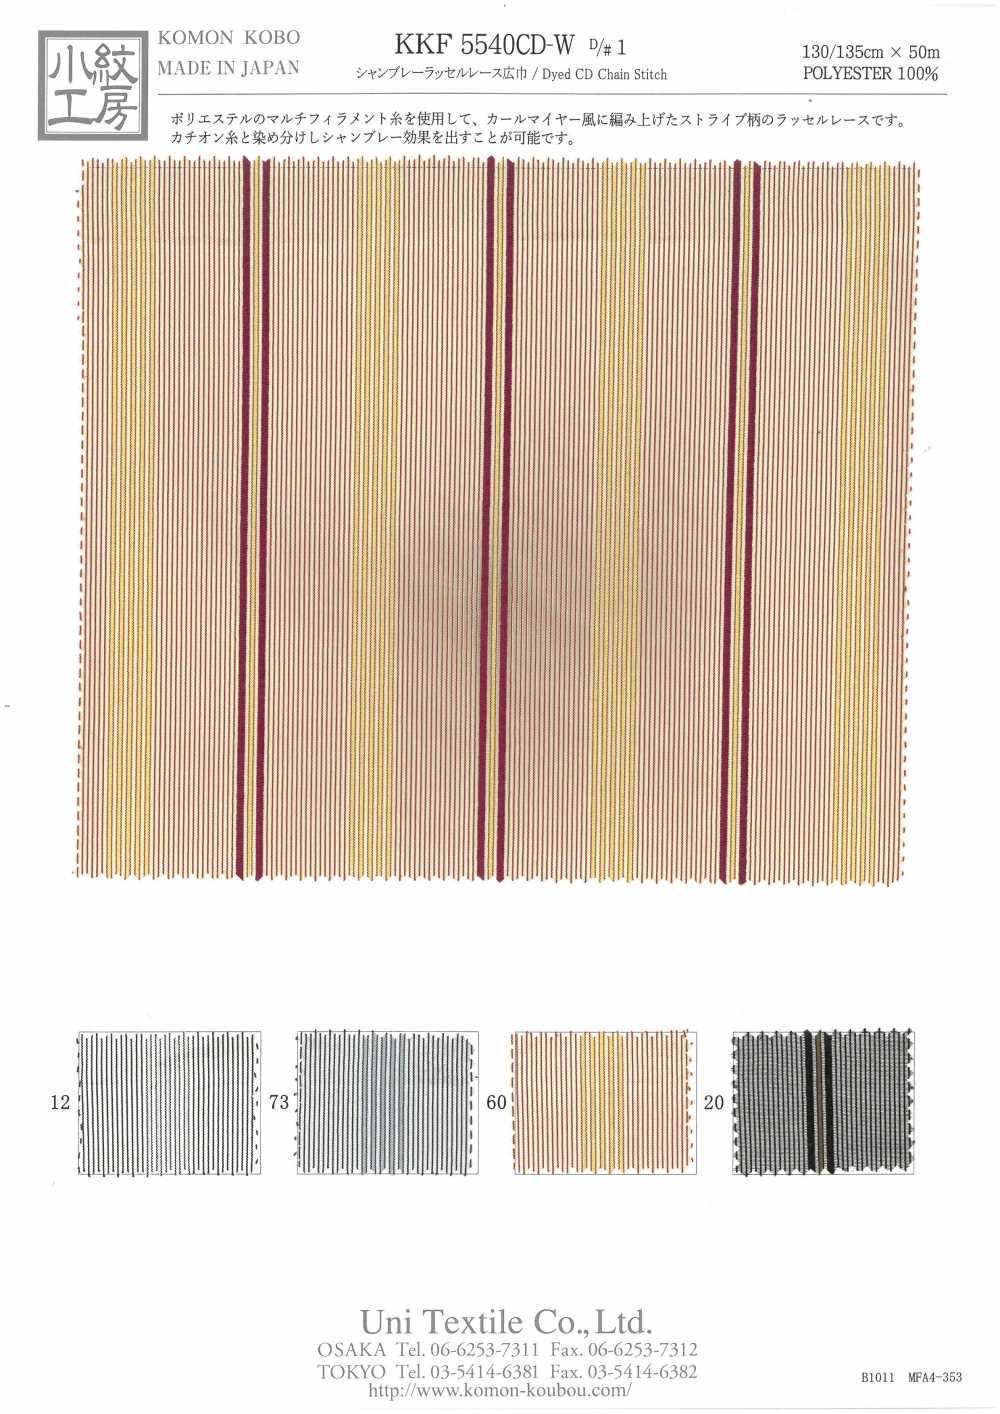 KKF5540CD-W-D/1 Chambray Raschel Lace Wide Width[Textile / Fabric] Uni Textile